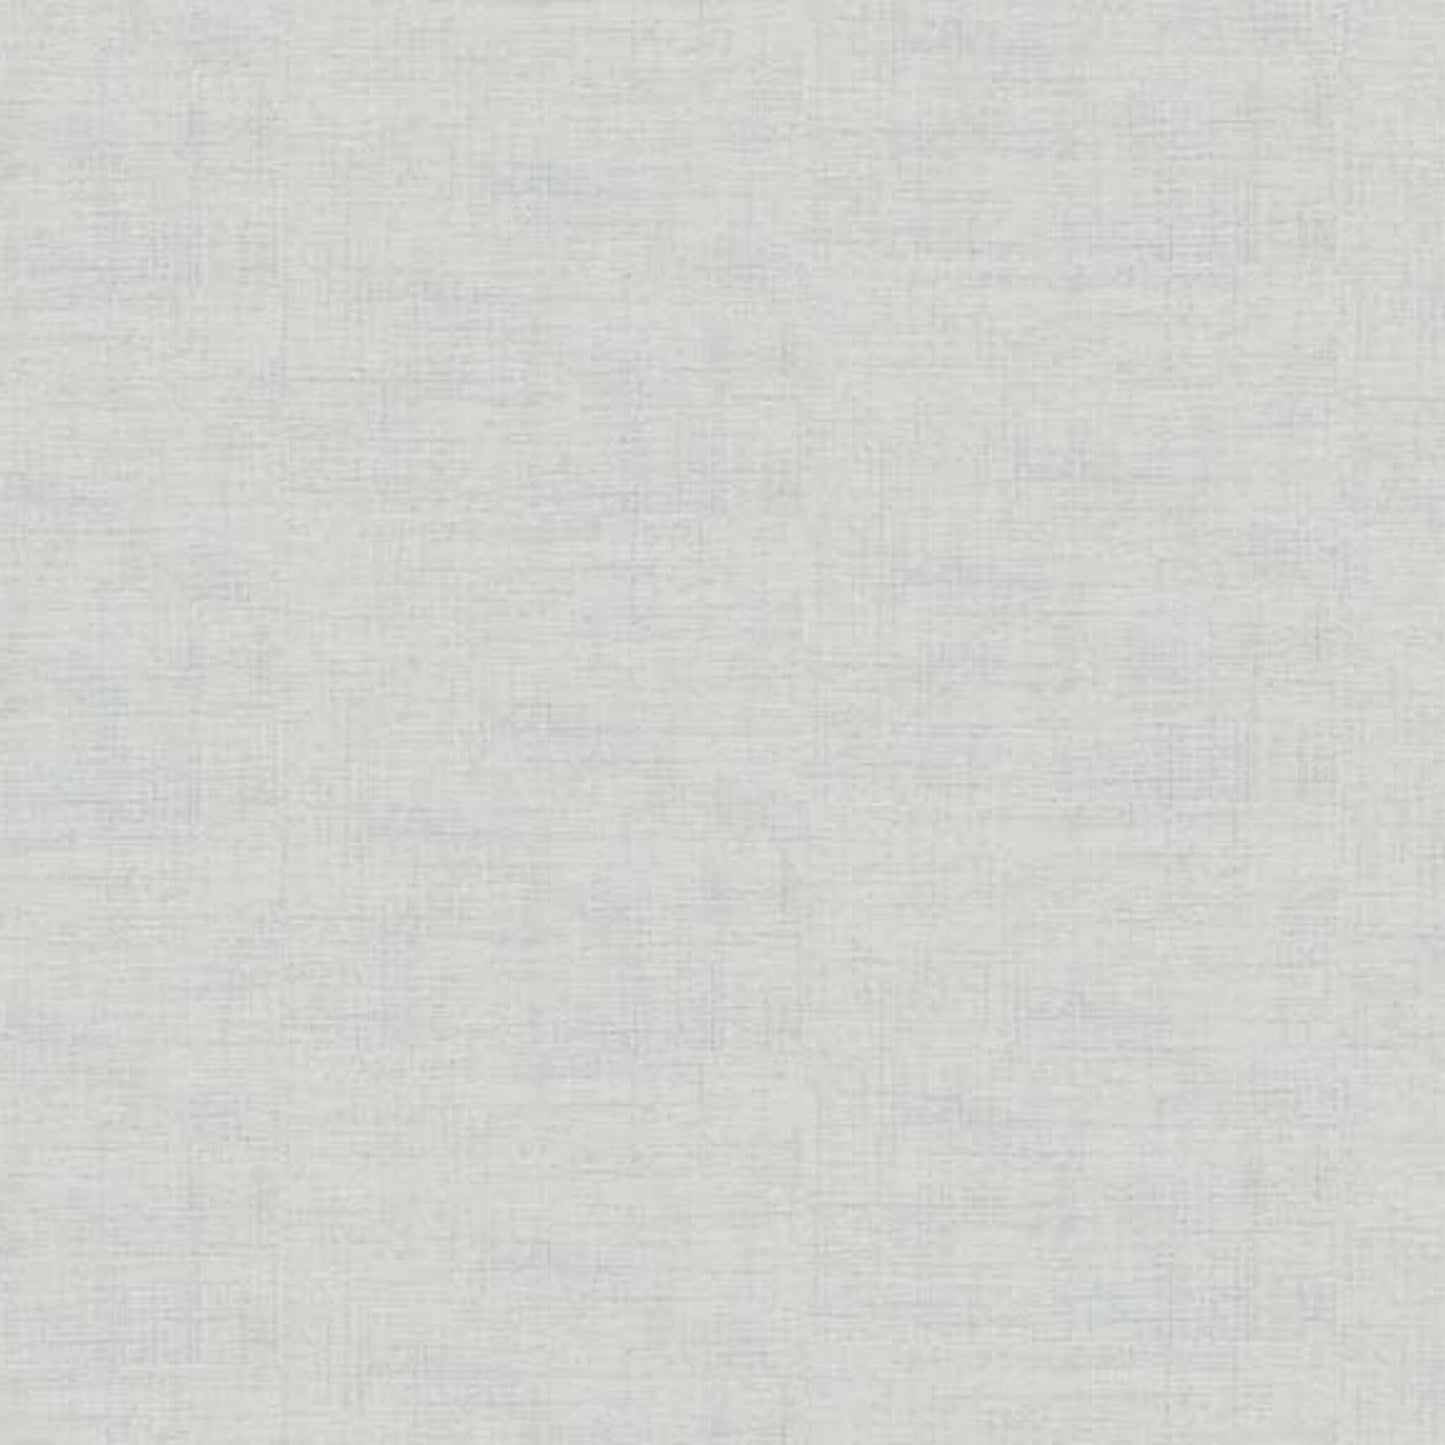 Dove Grey (1473/S2) - Linen Texture range of fabric by Makower